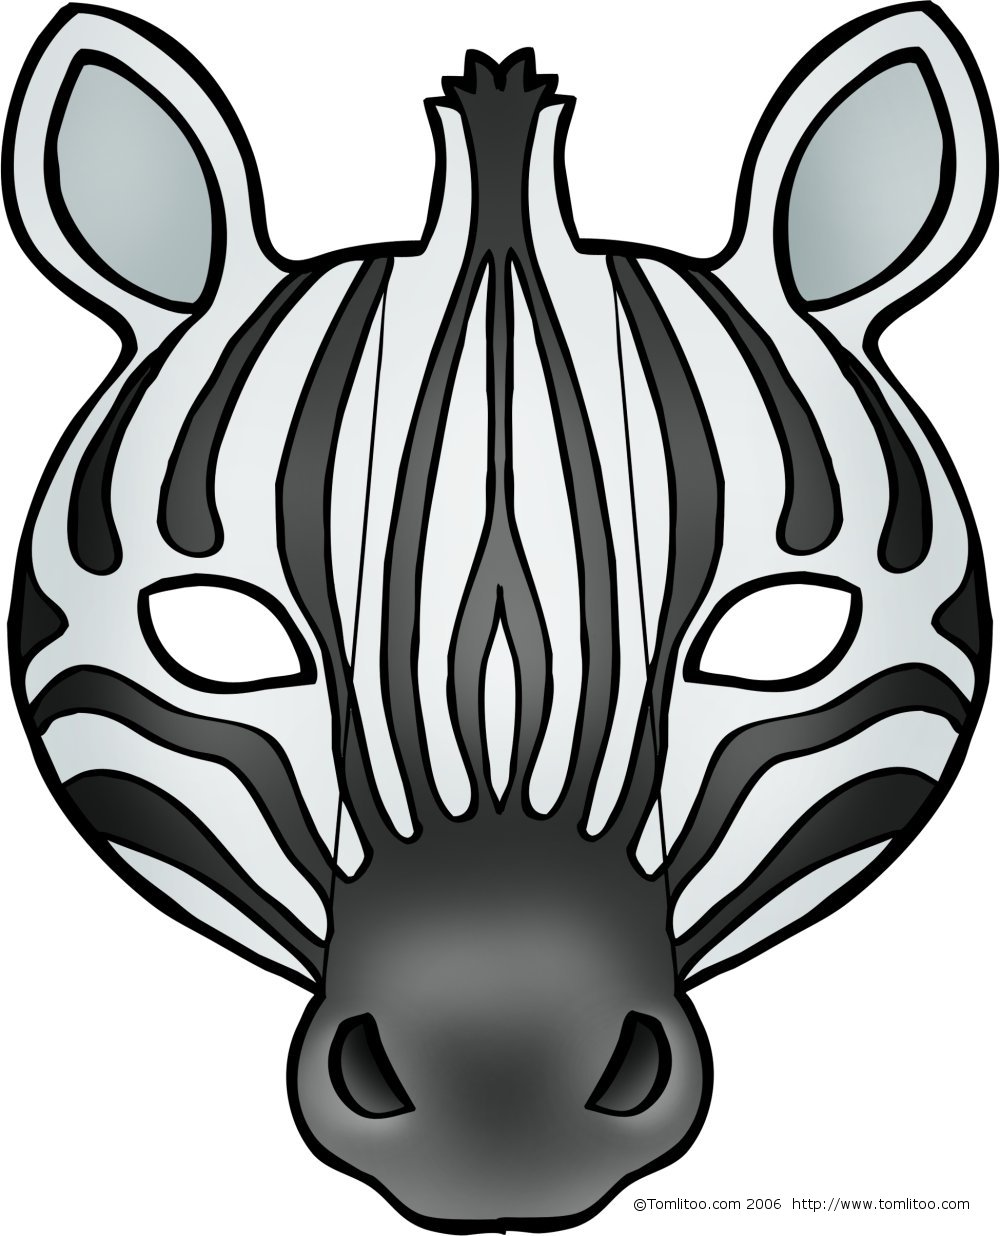 maski - Zebra.jpg